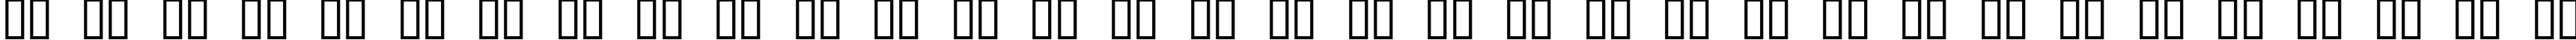 Пример написания русского алфавита шрифтом Angular Shadow